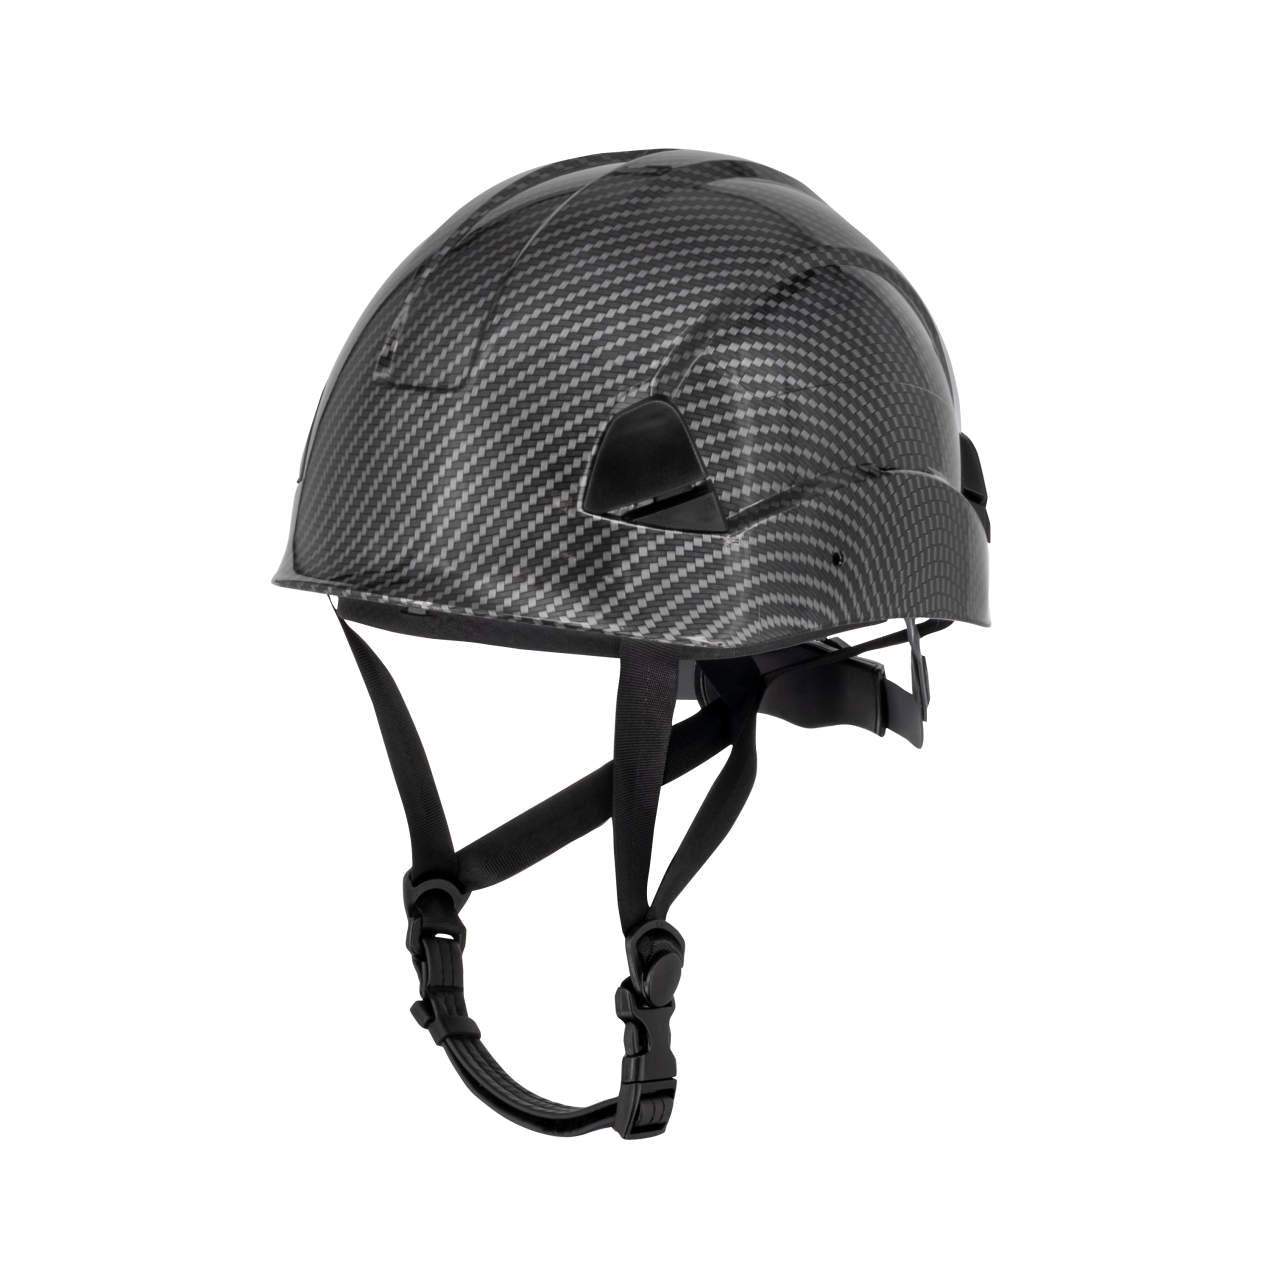 DPG22 Type 2 Safety Helmet